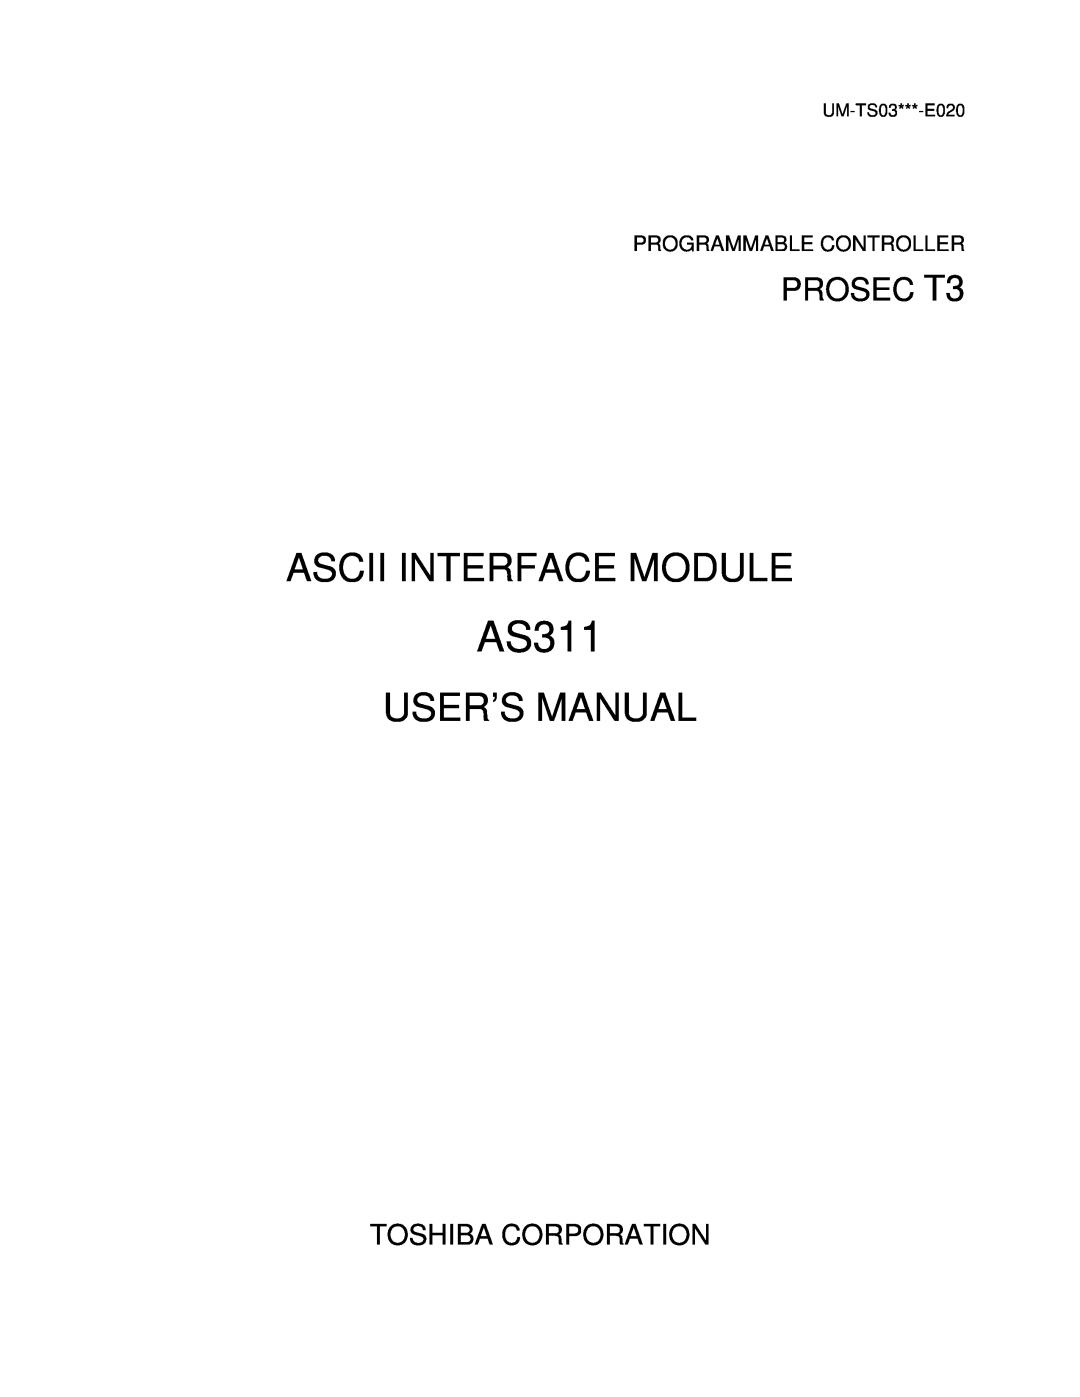 Toshiba AS311 user manual Toshiba Corporation, Programmable Controller, Ascii Interface Module, User’S Manual, PROSEC T3 